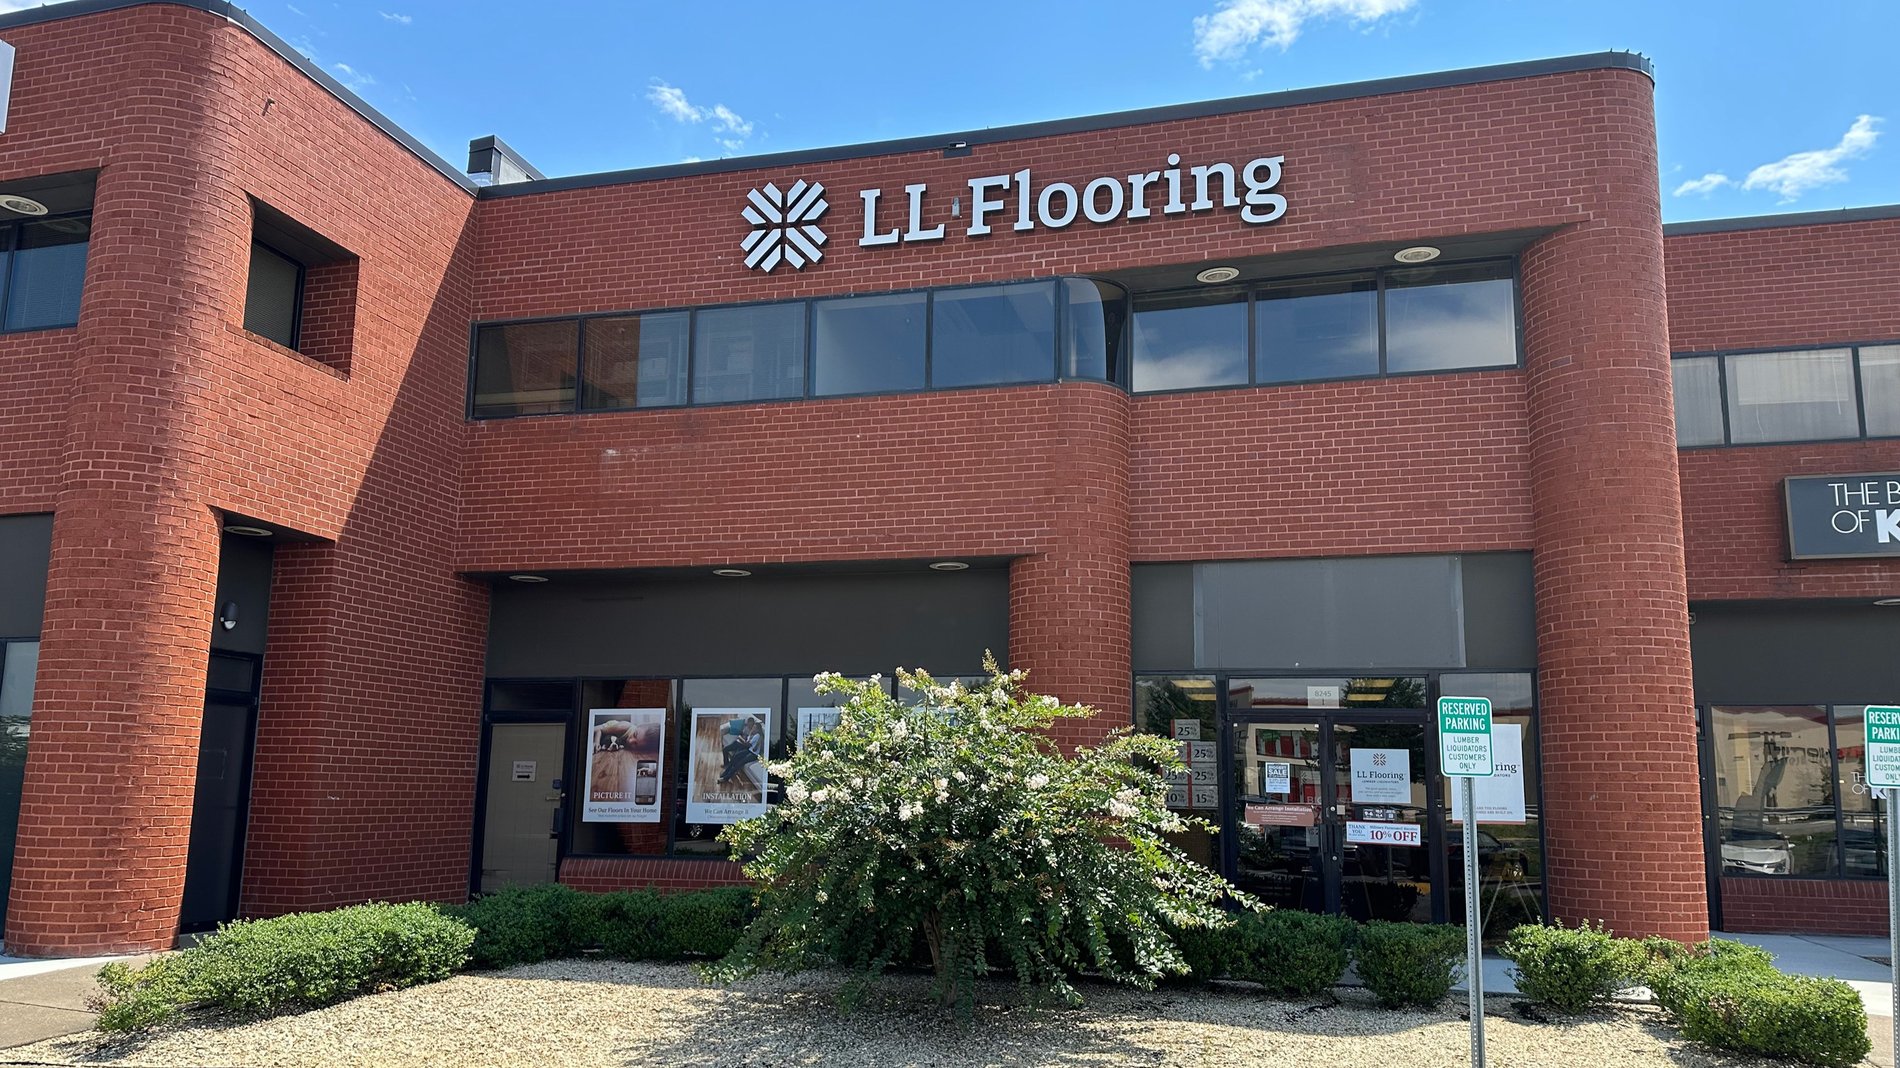 LL Flooring #1061 Lorton | 8245 Backlick Road | Storefront